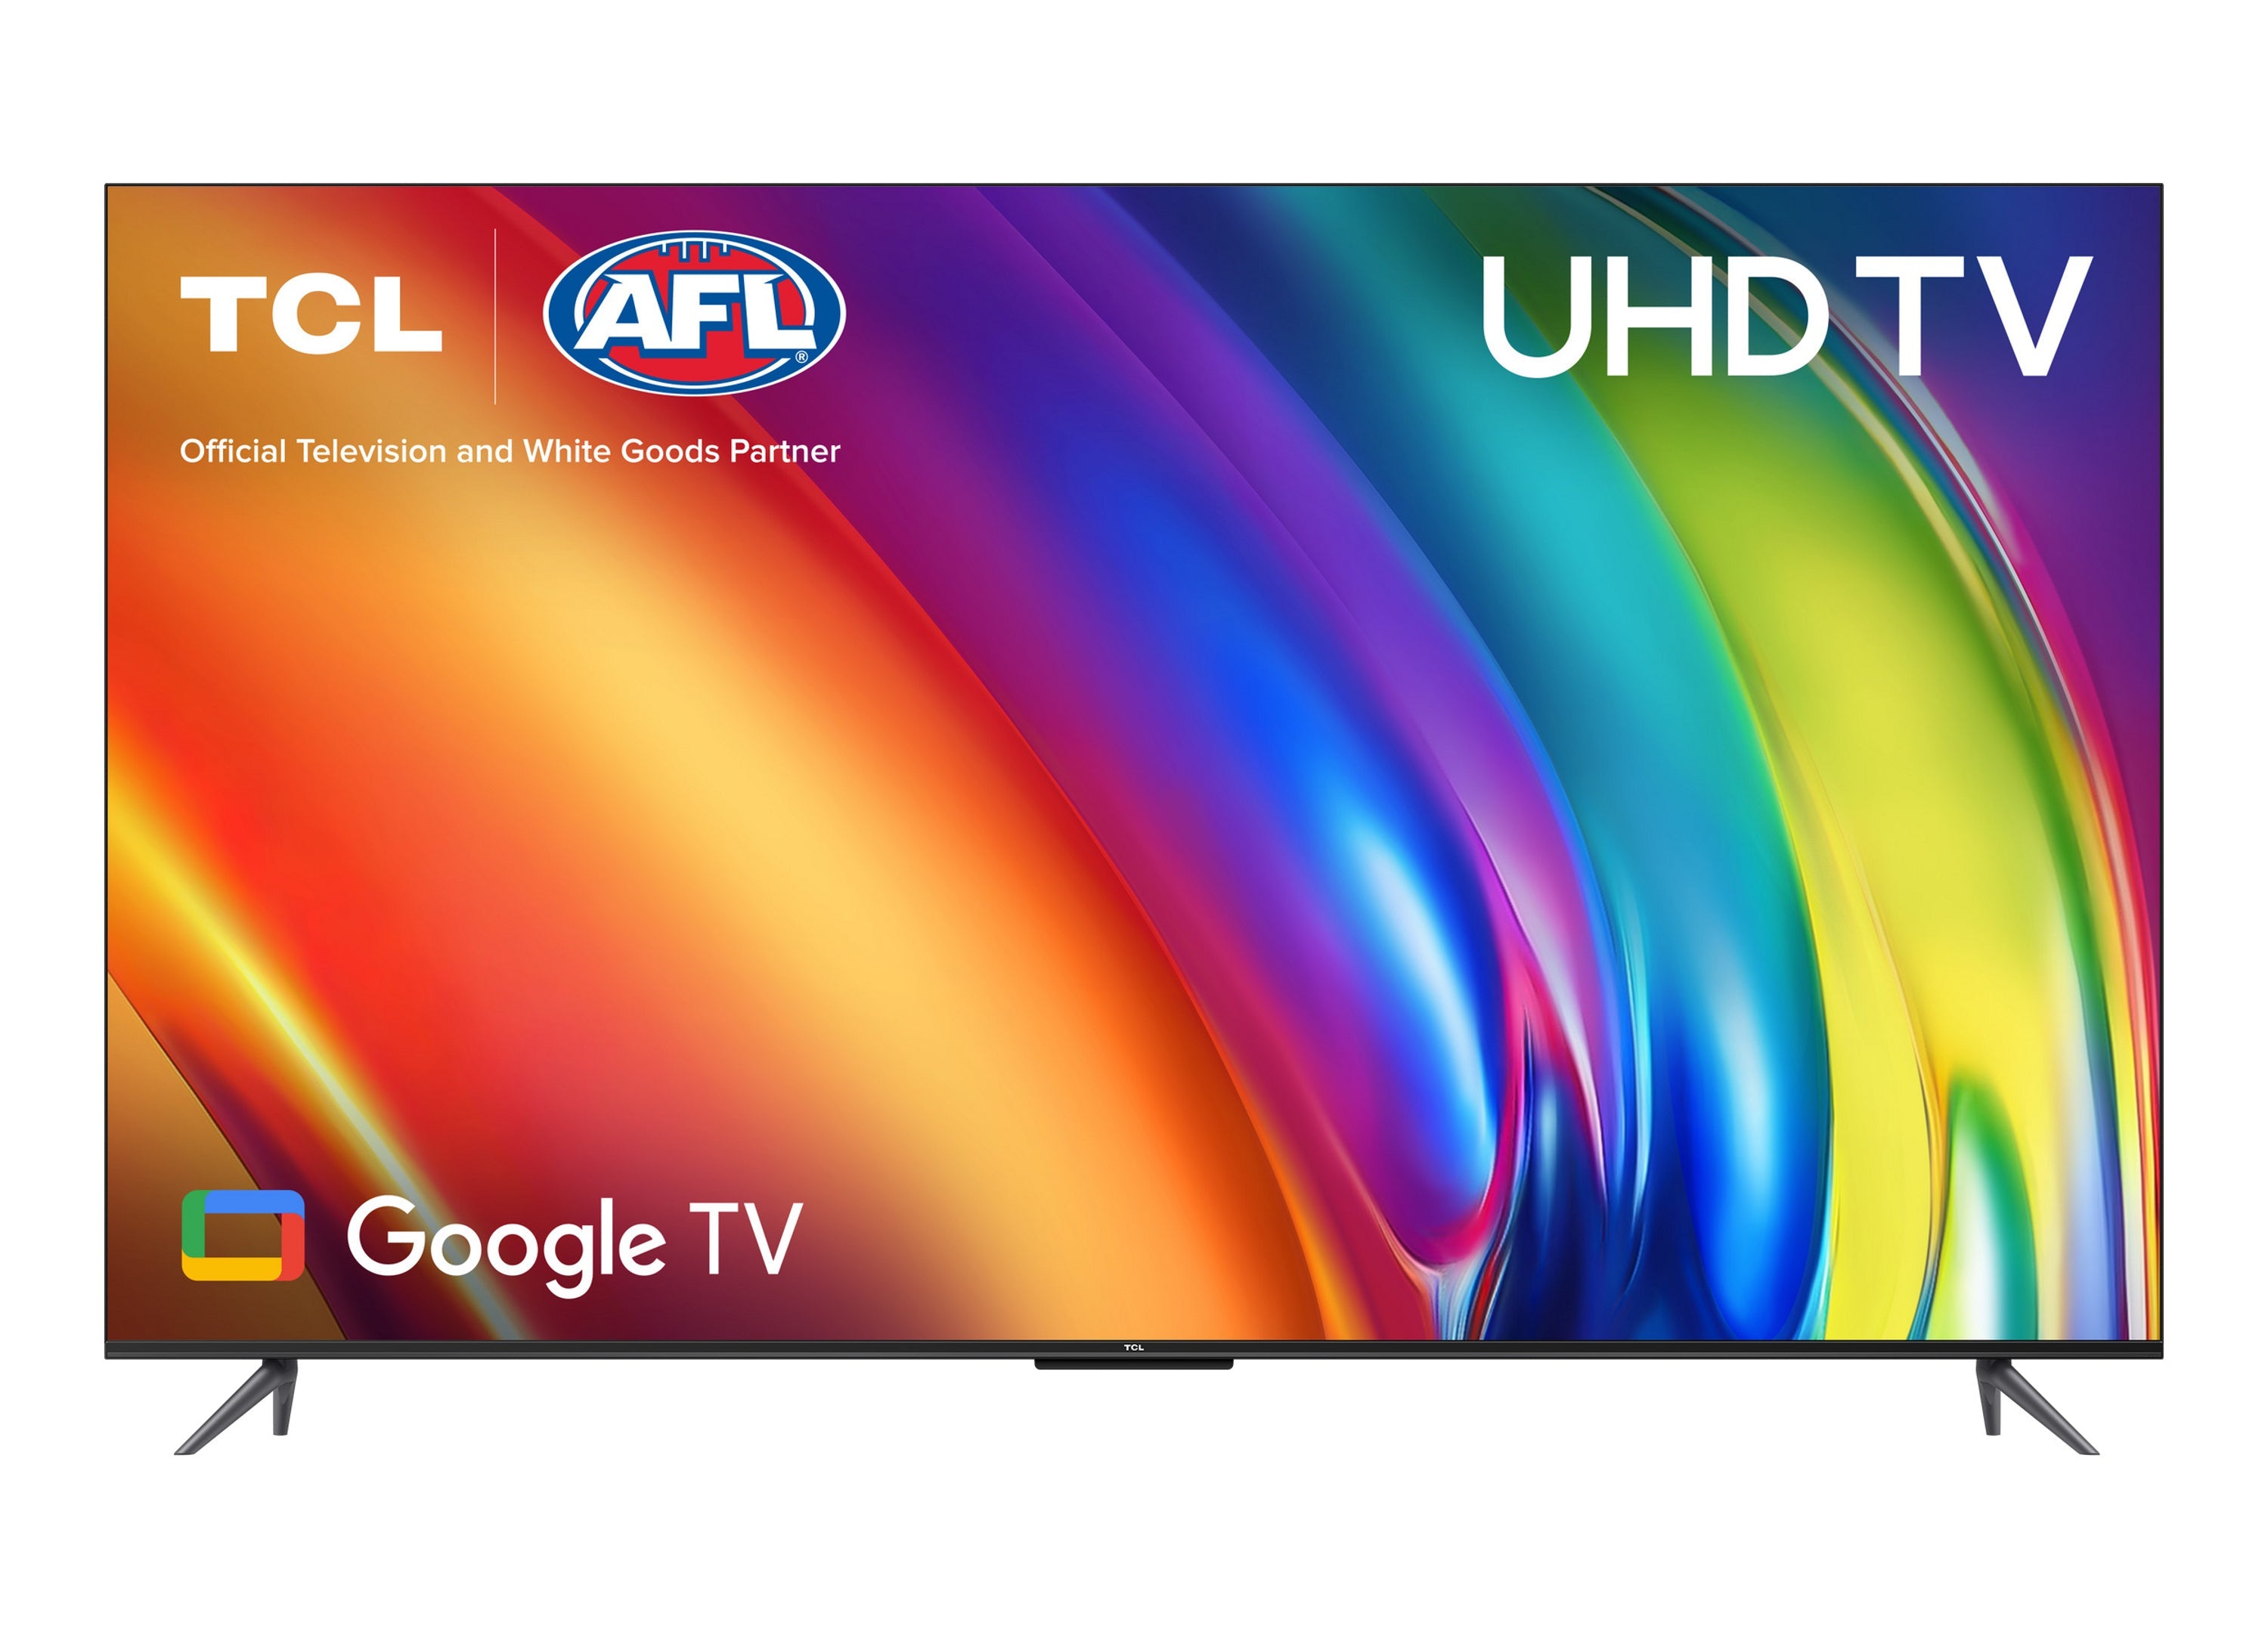 TCL UHD 4K Google TV 55